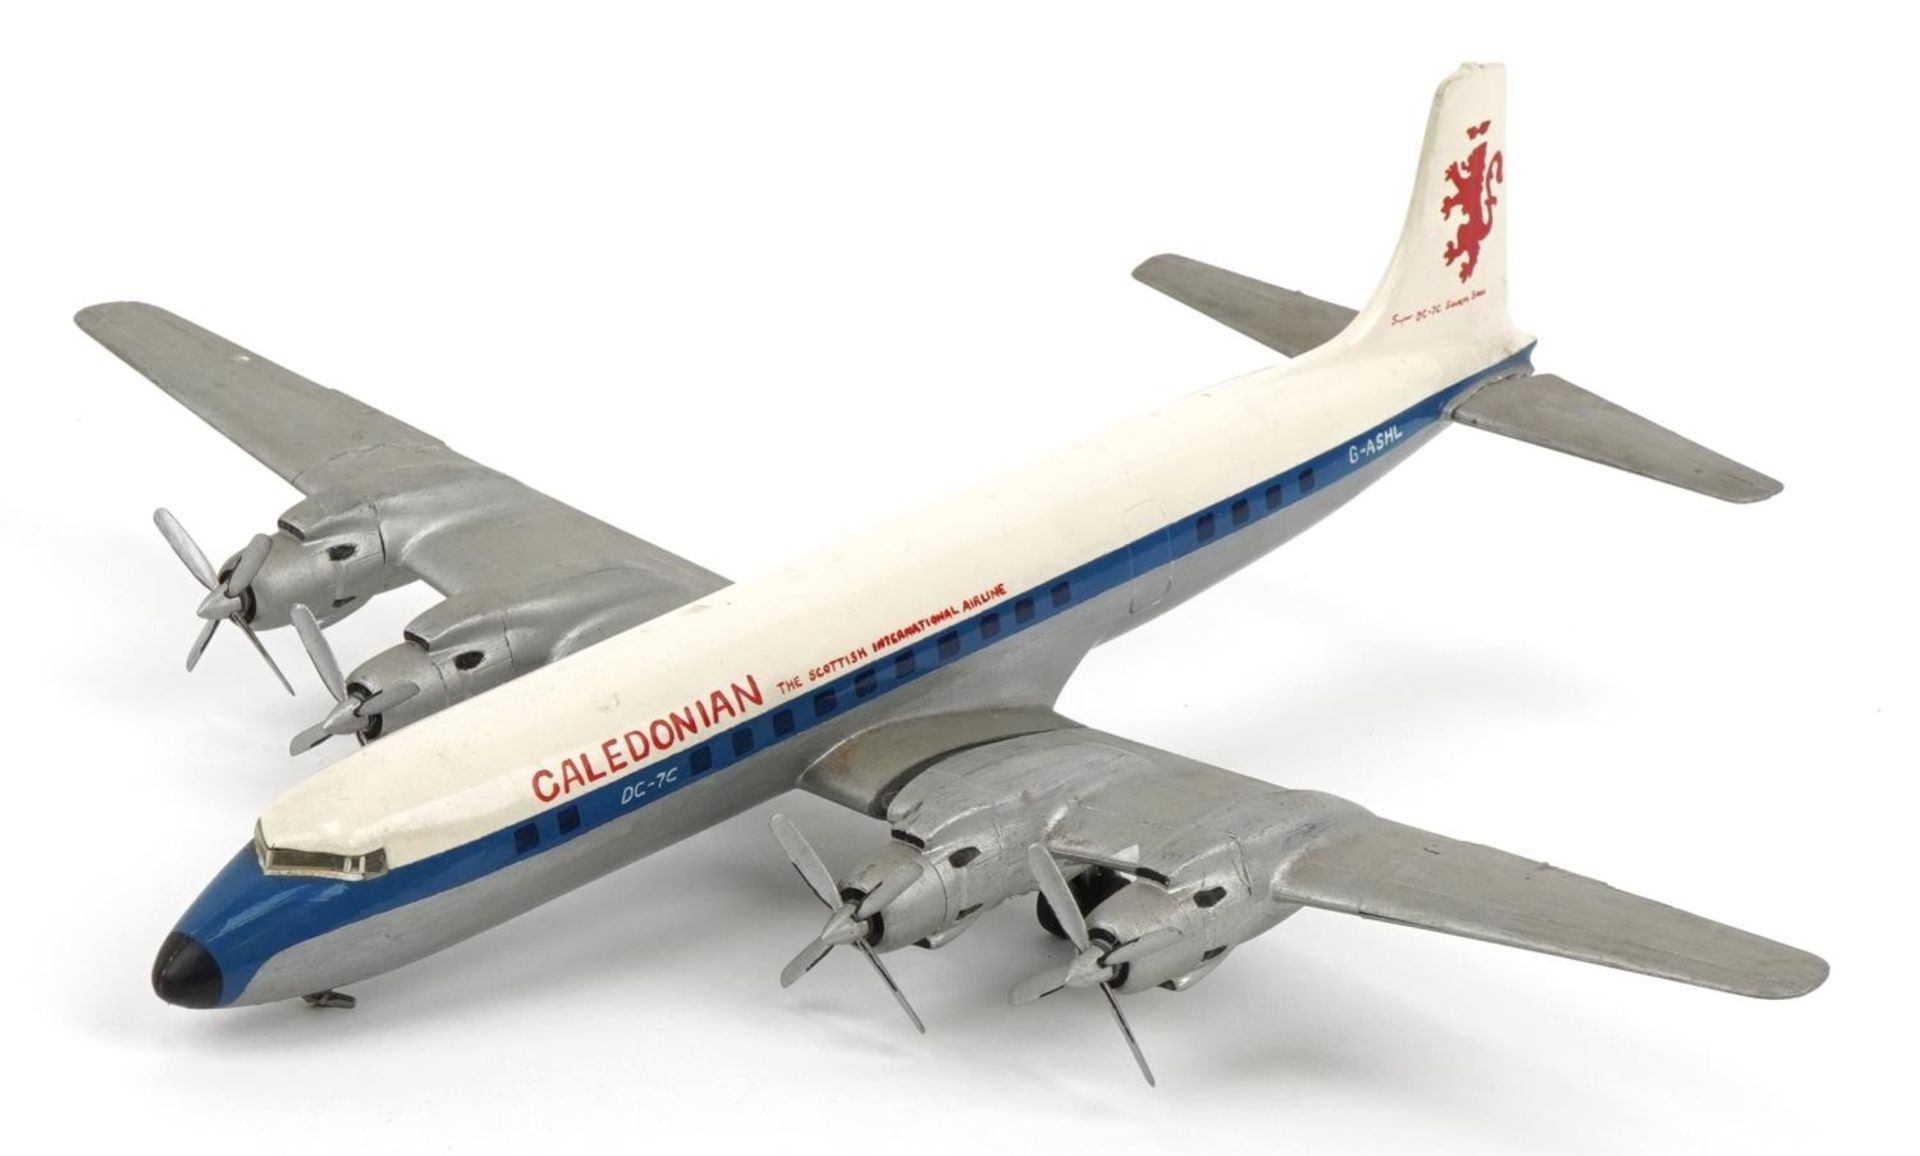 Vintage aviation interest 1:72 scale Caledonian DC7C kit model, 40cm wide